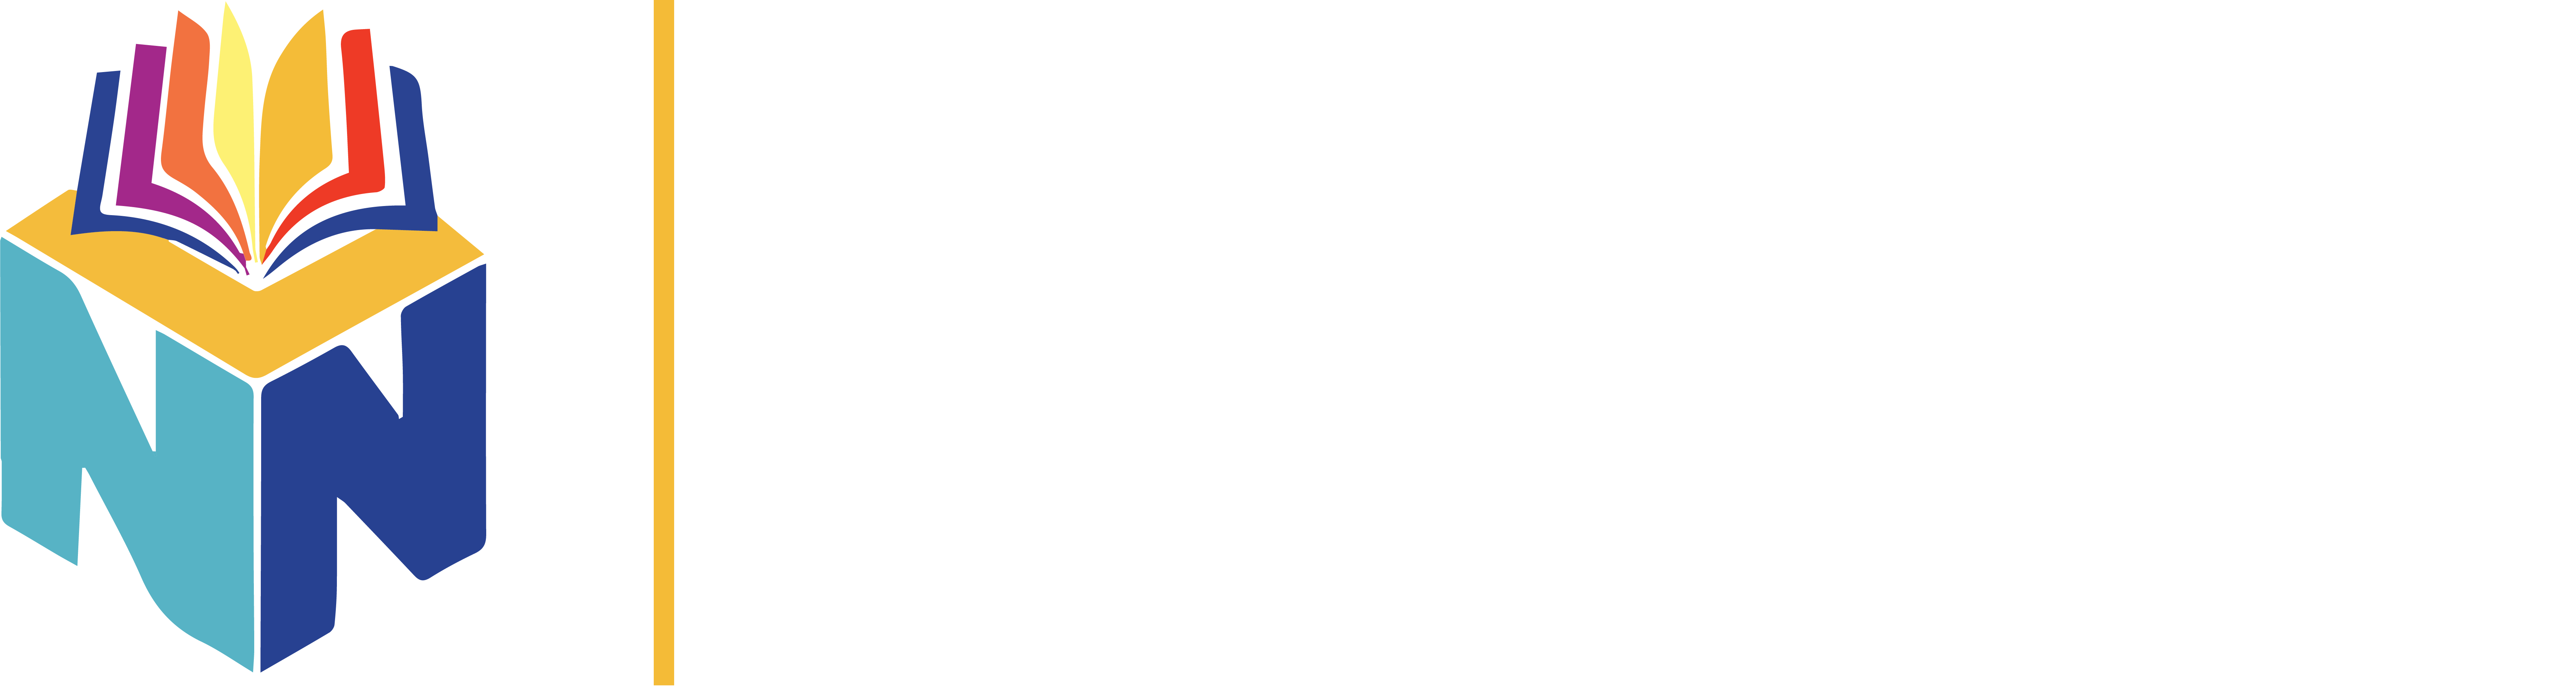 Nursing, Nursing Online